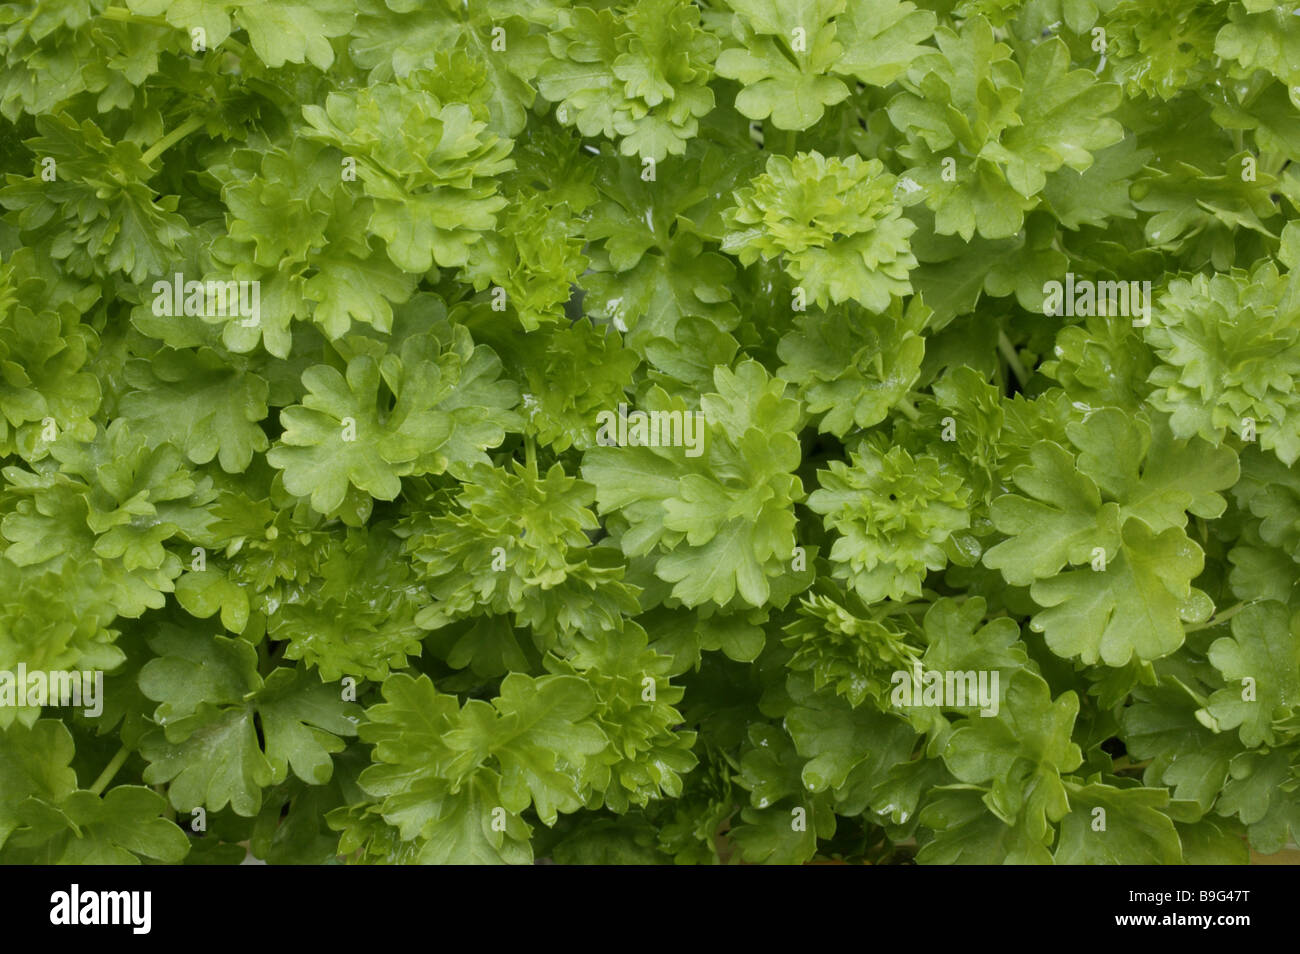 Crinkly parsley  Petroselinum crispum Stock Photo